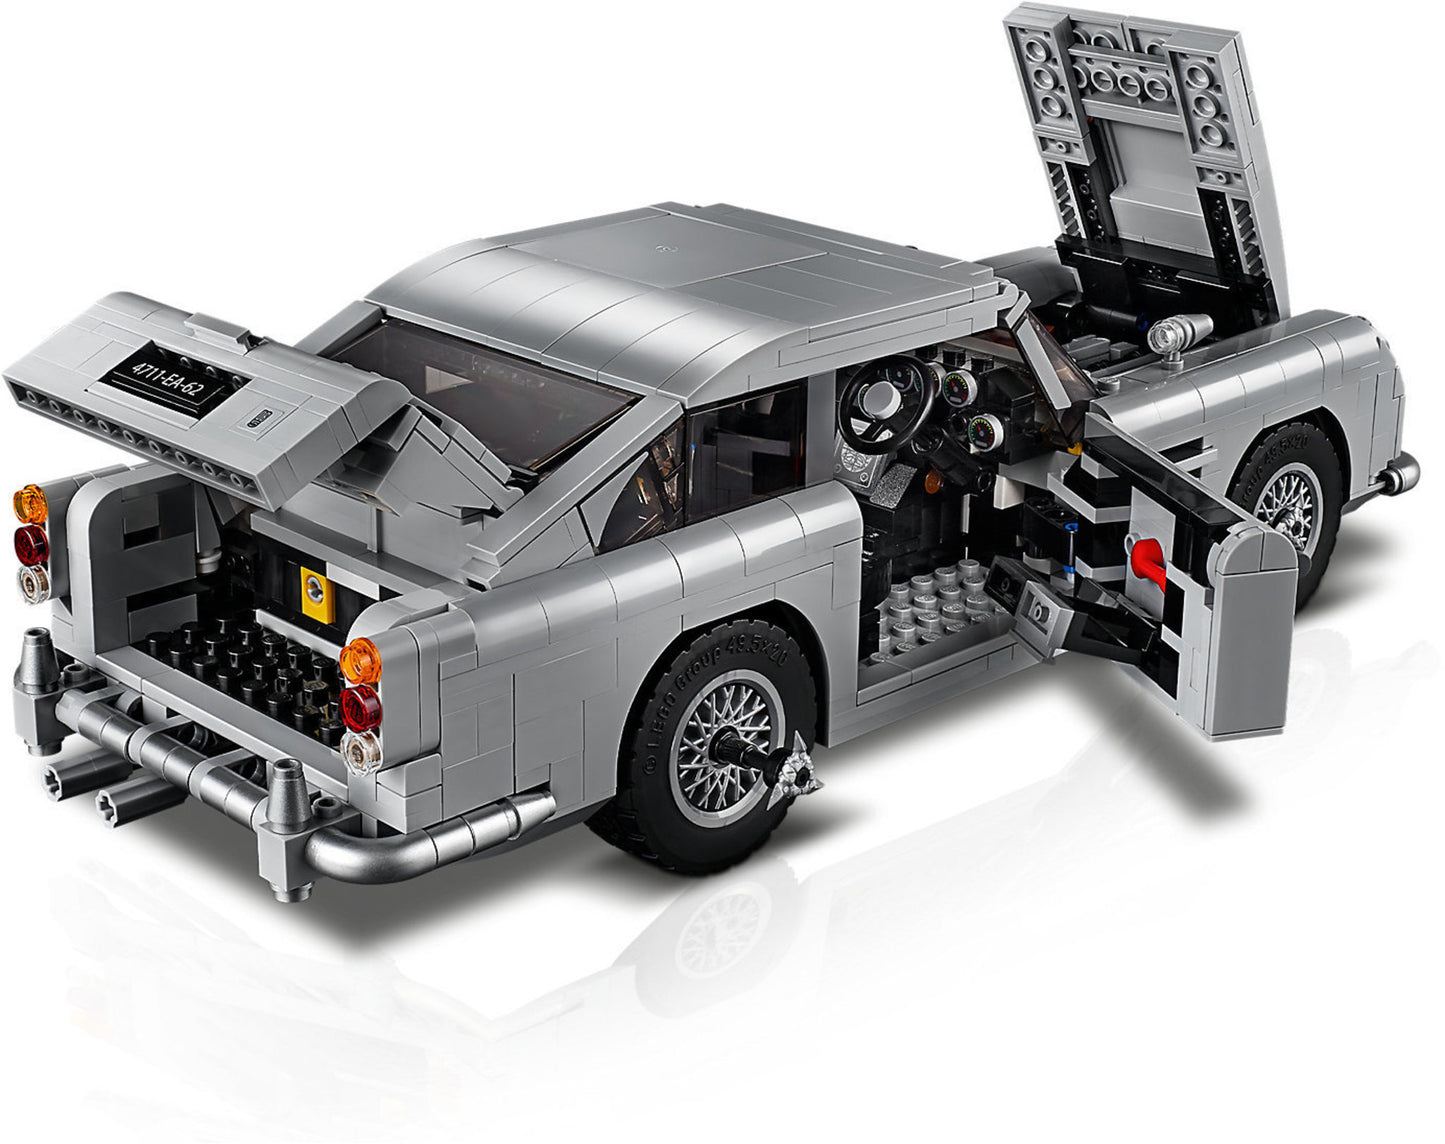 10262 LEGO Creator  - James Bond™ Aston Martin Db5